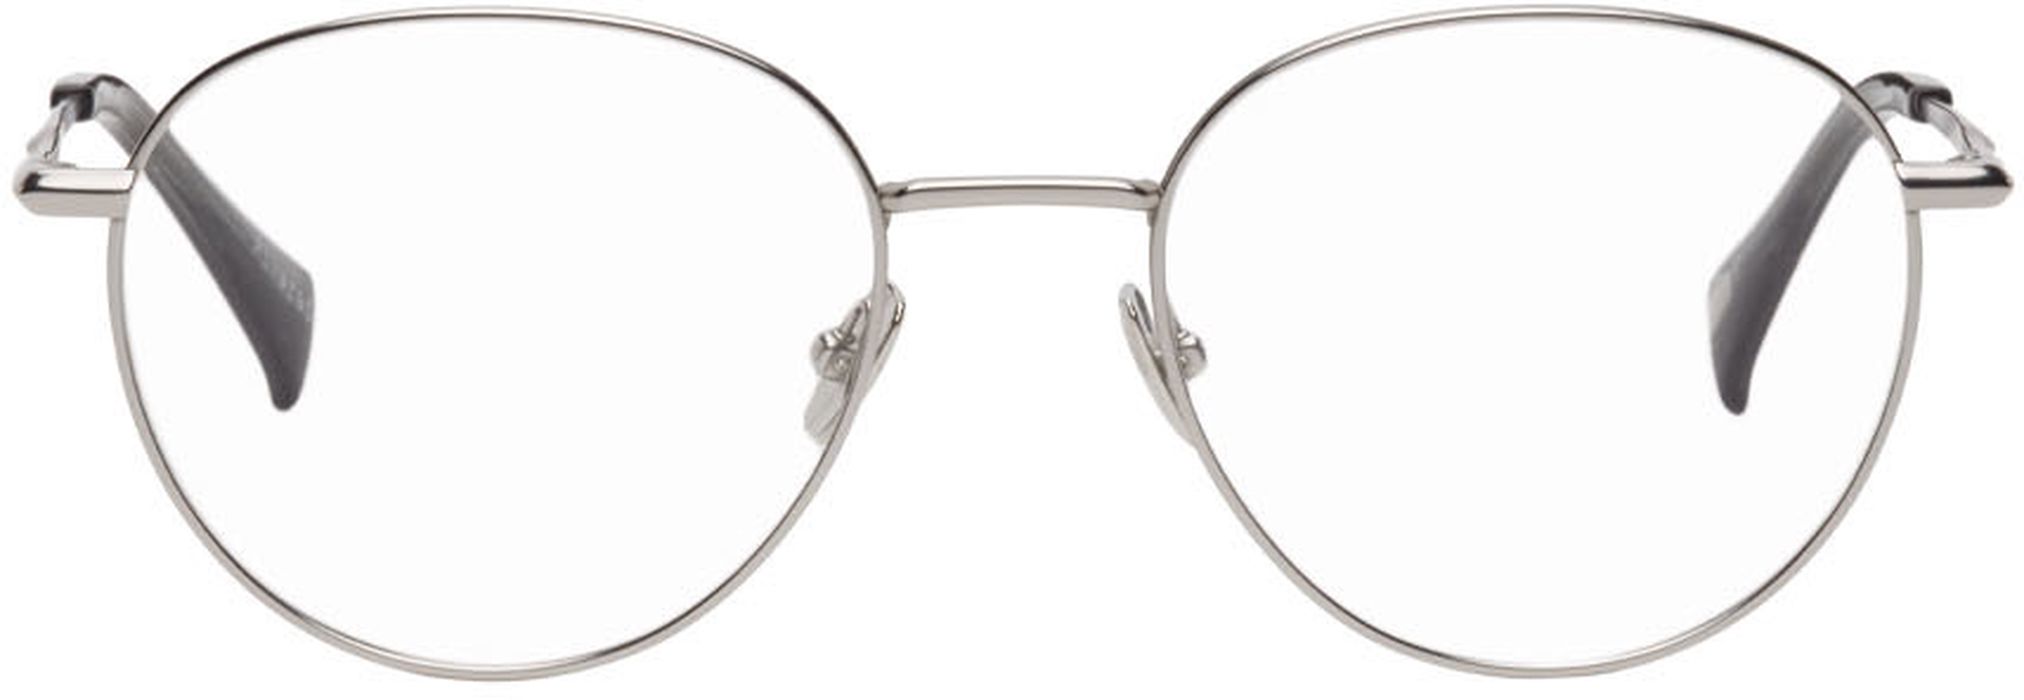 RAEN Silver Alvarado Glasses